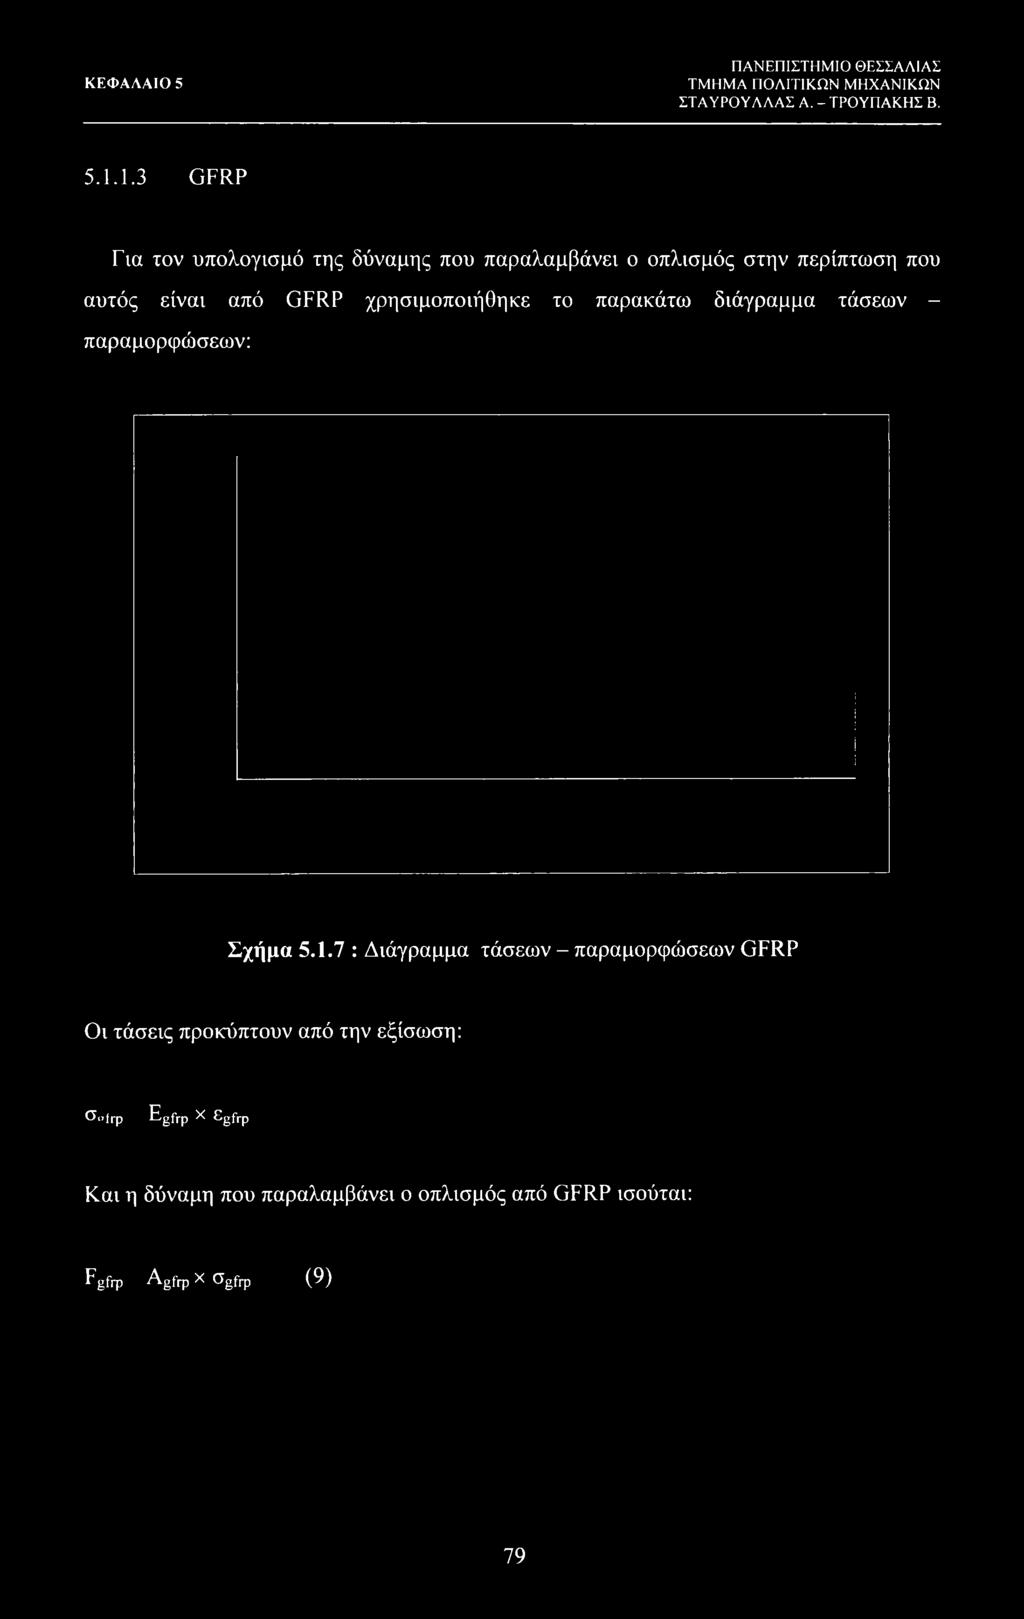 GFRP χρησιμοποιήθηκε το παρακάτω διάγραμμα τάσεων - παραμορφώσεων: Σχήμα 5.1.